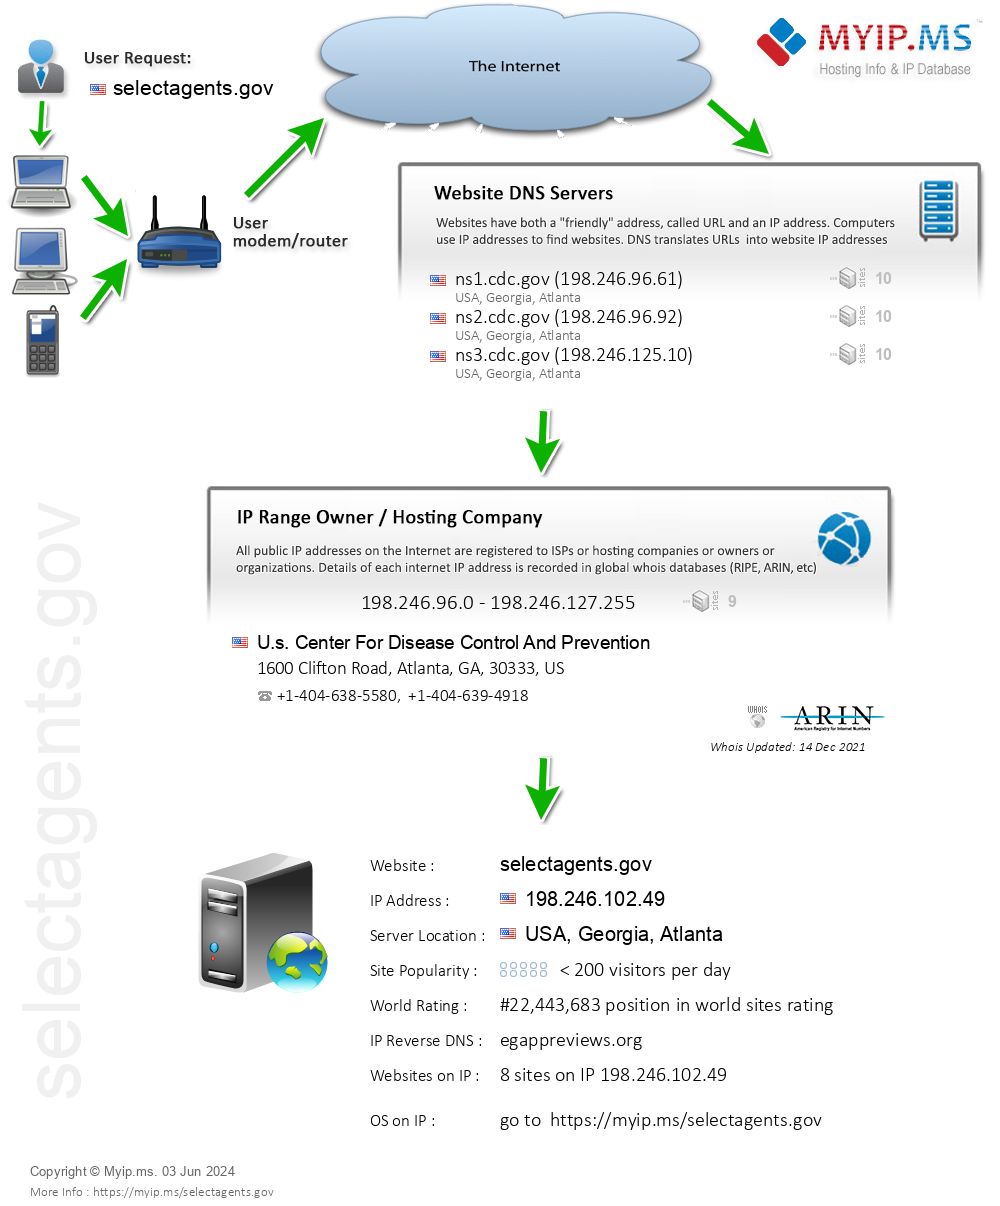 Selectagents.gov - Website Hosting Visual IP Diagram